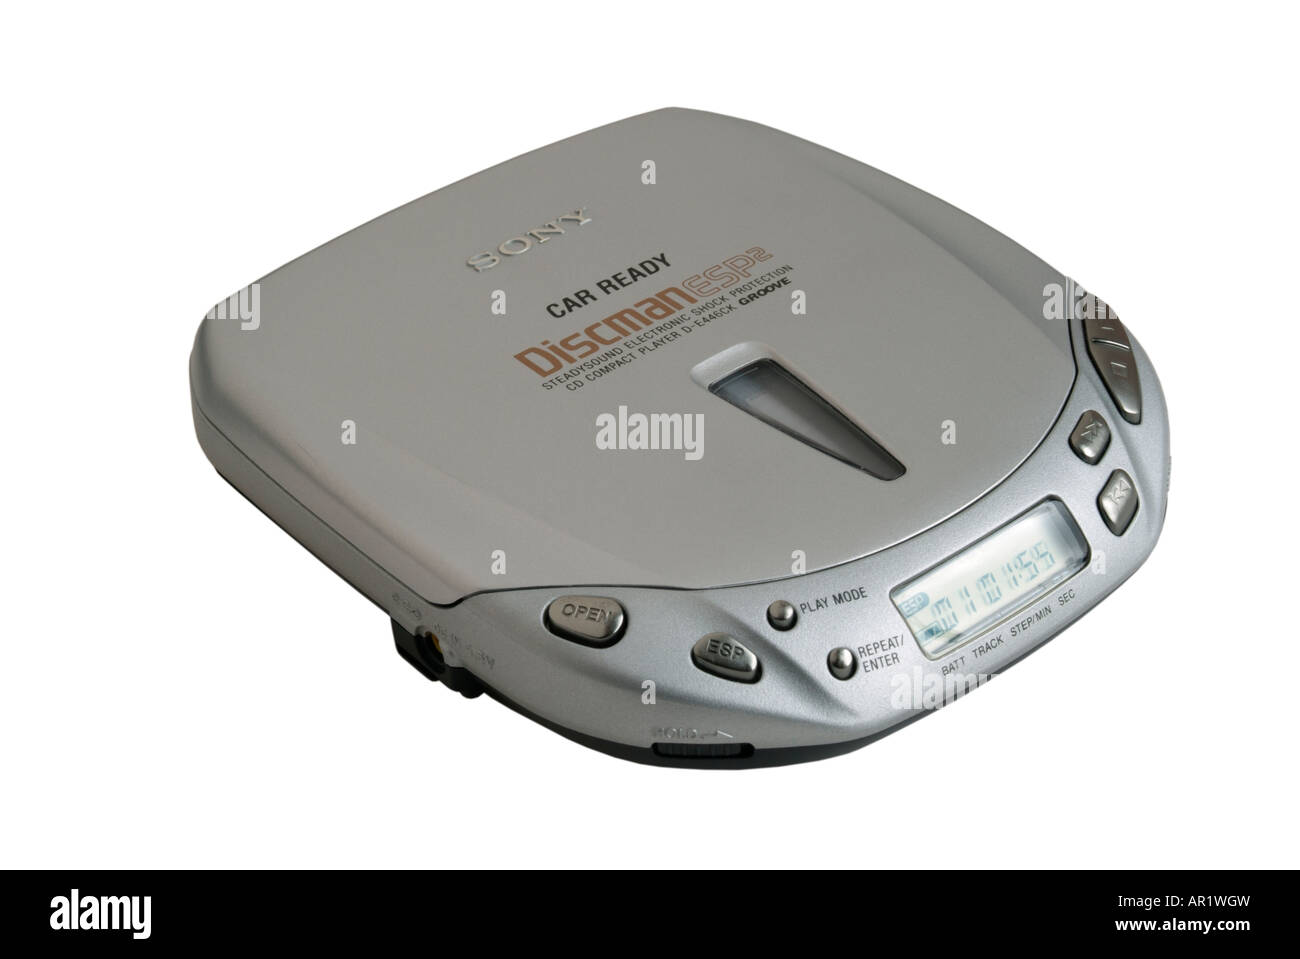 Sony Discman D-E446CK compact disc player Stock Photo - Alamy